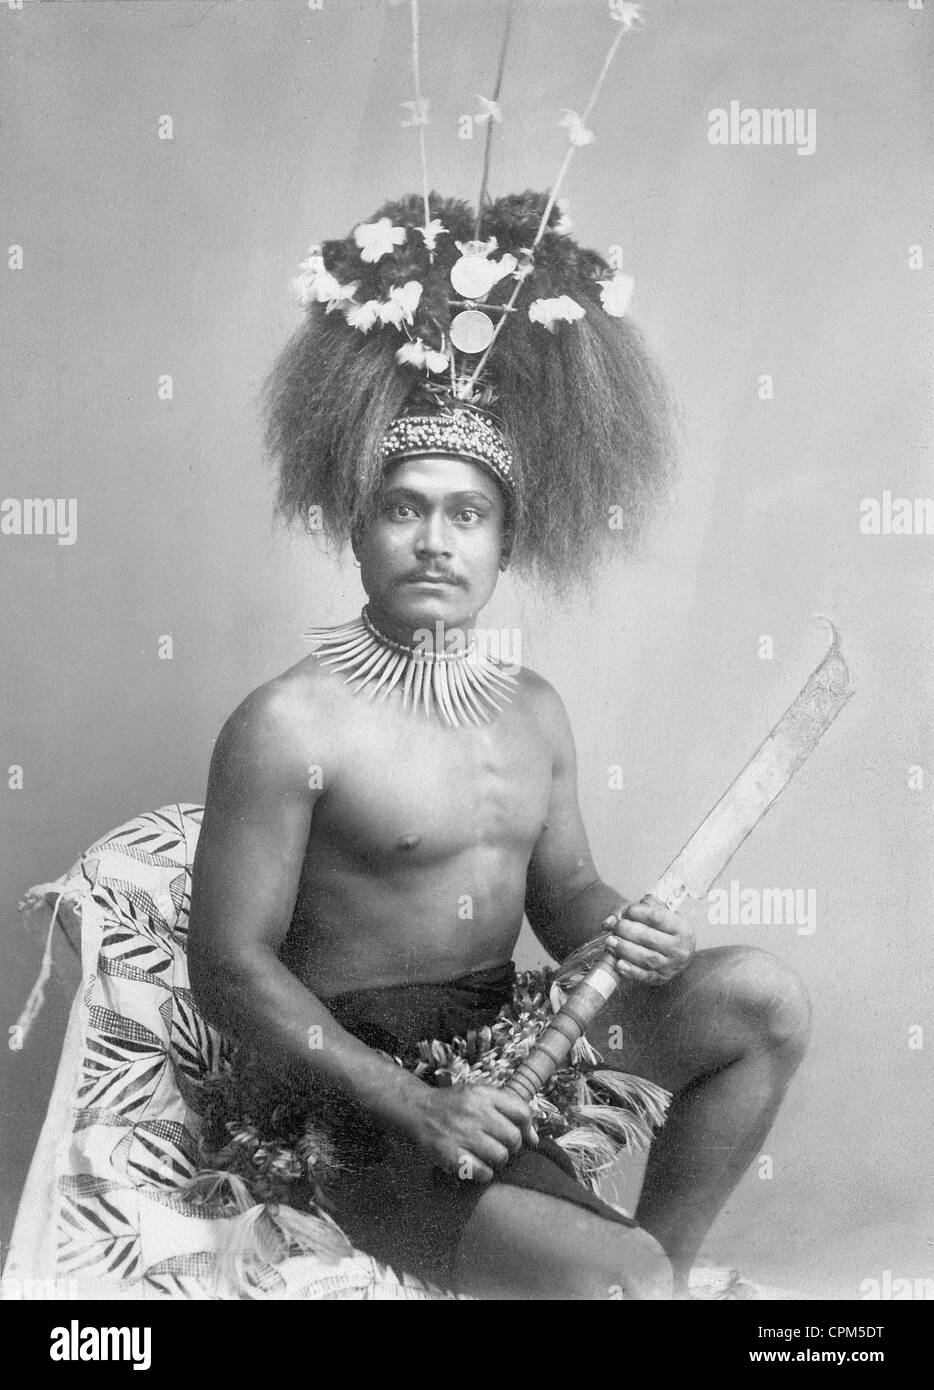 Warrior from Samoa, approx. 1900 Stock Photo